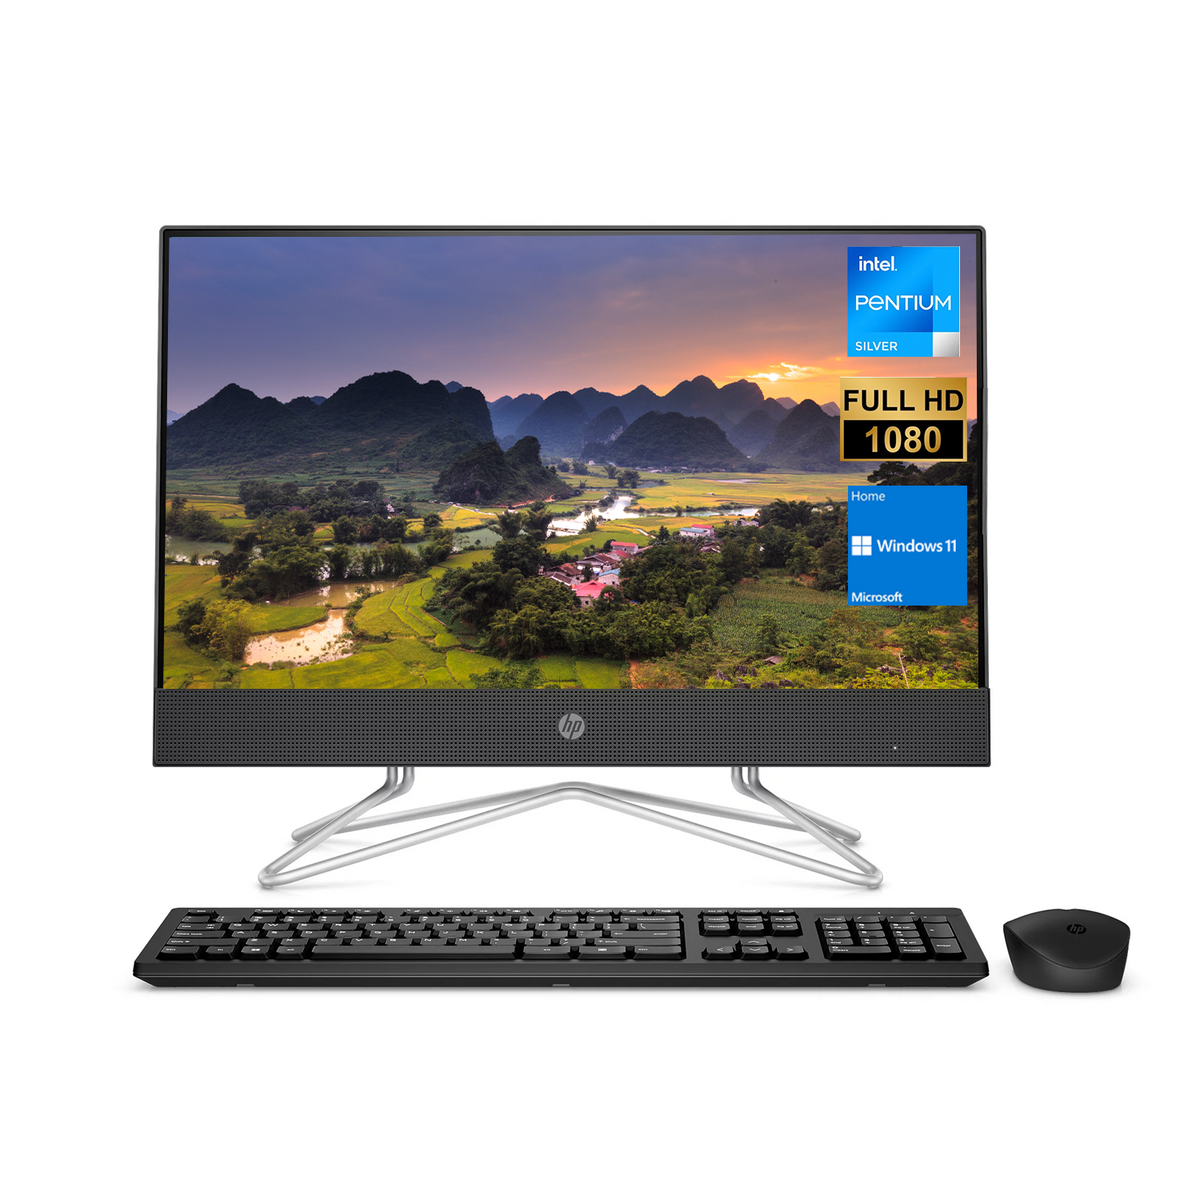 HP All-in-One Desktop, 21.5" FHD Screen, Intel Pentium Silver J5040 Processor, Webcam, HDMI, RJ45, Media Card Reader, Wi-Fi, Wireless KB & Mouse